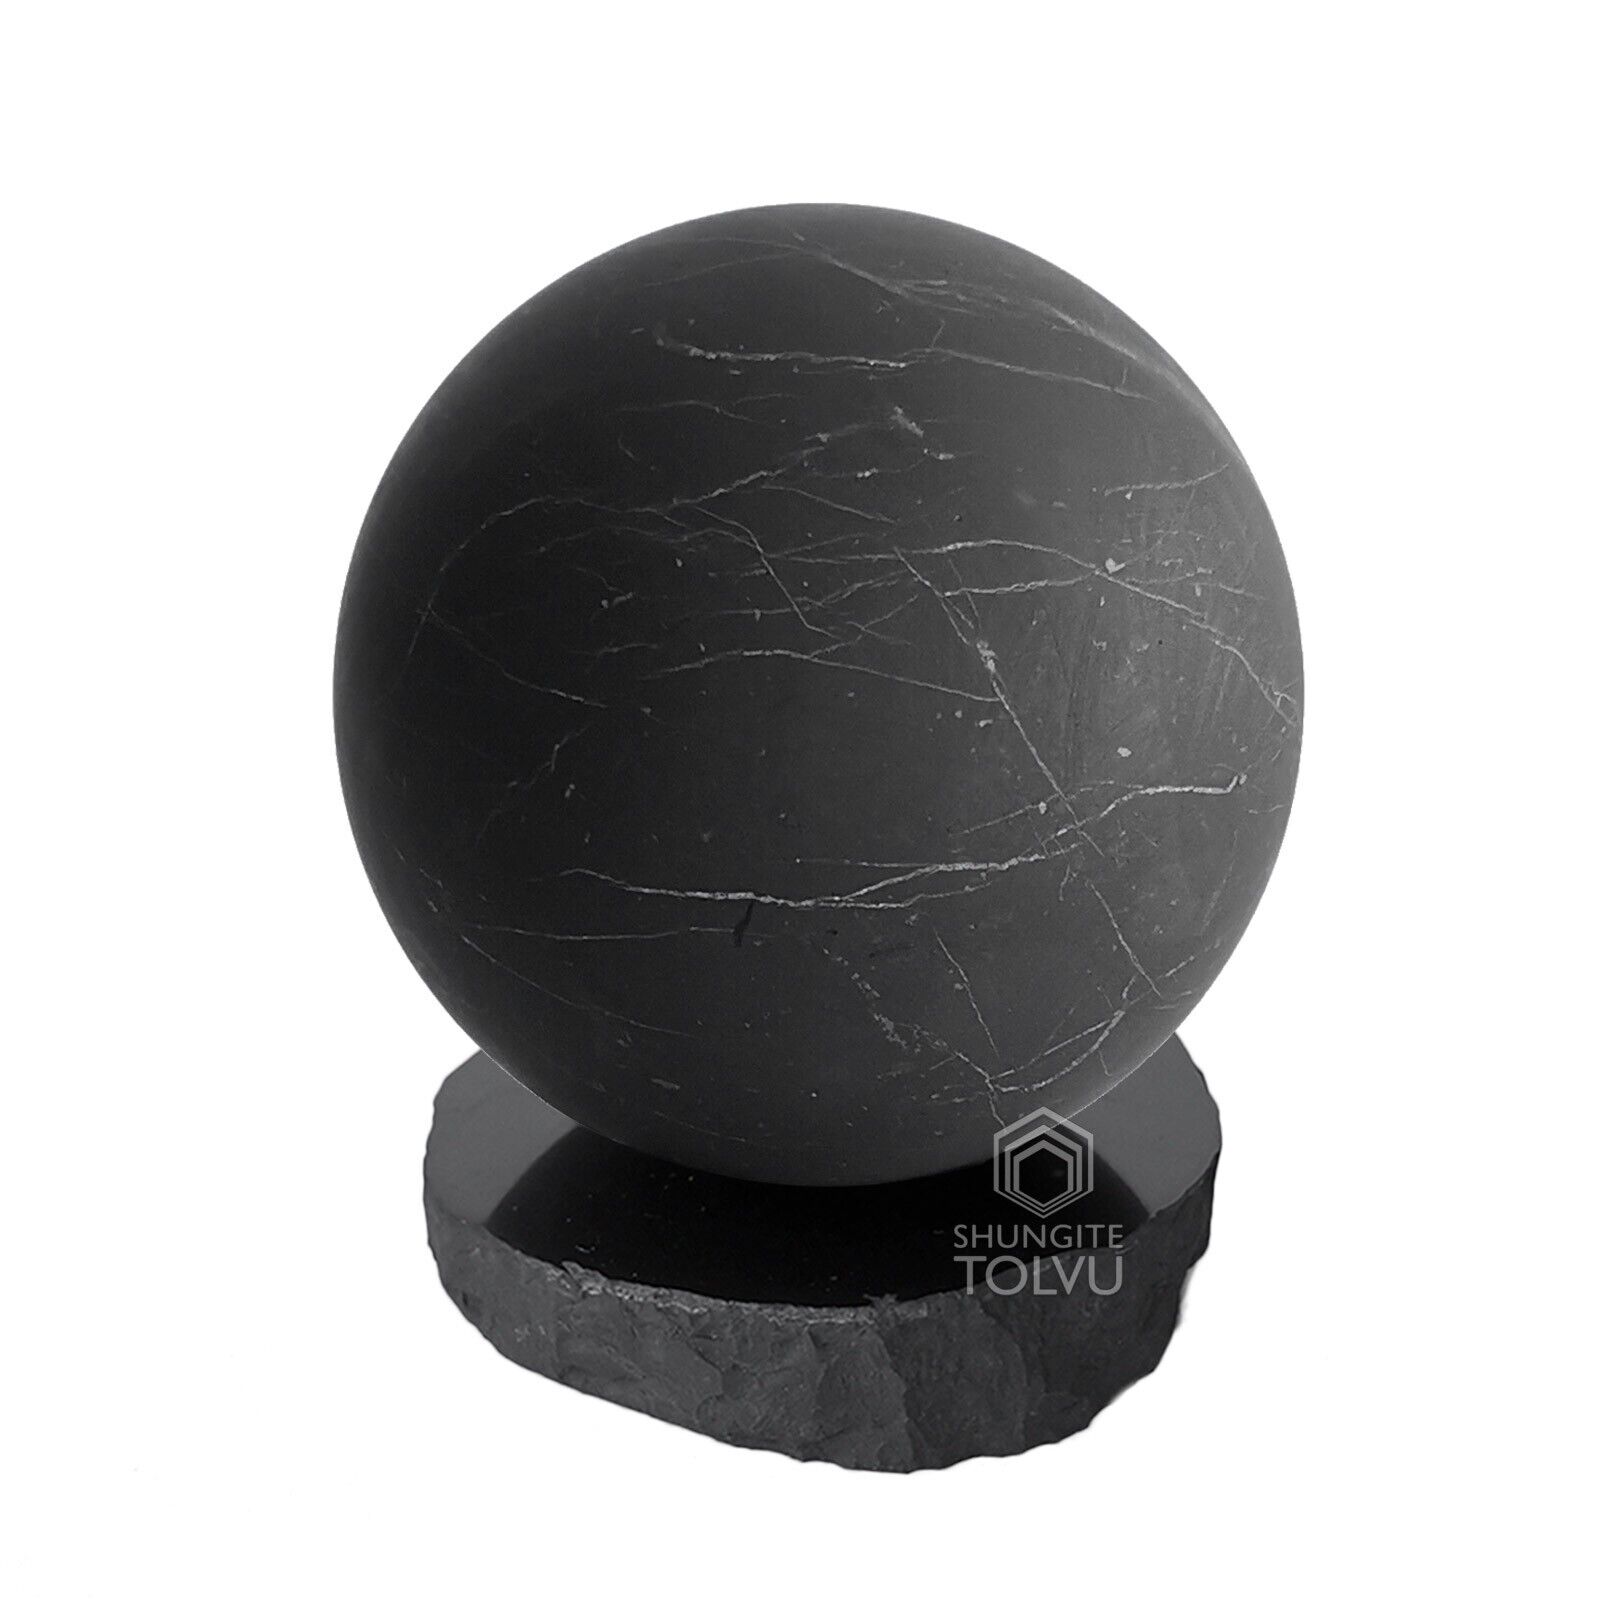 Big Shungite Sphere 3.2 in. - Natural Unpolished - Real Shungite stone - Tolvu